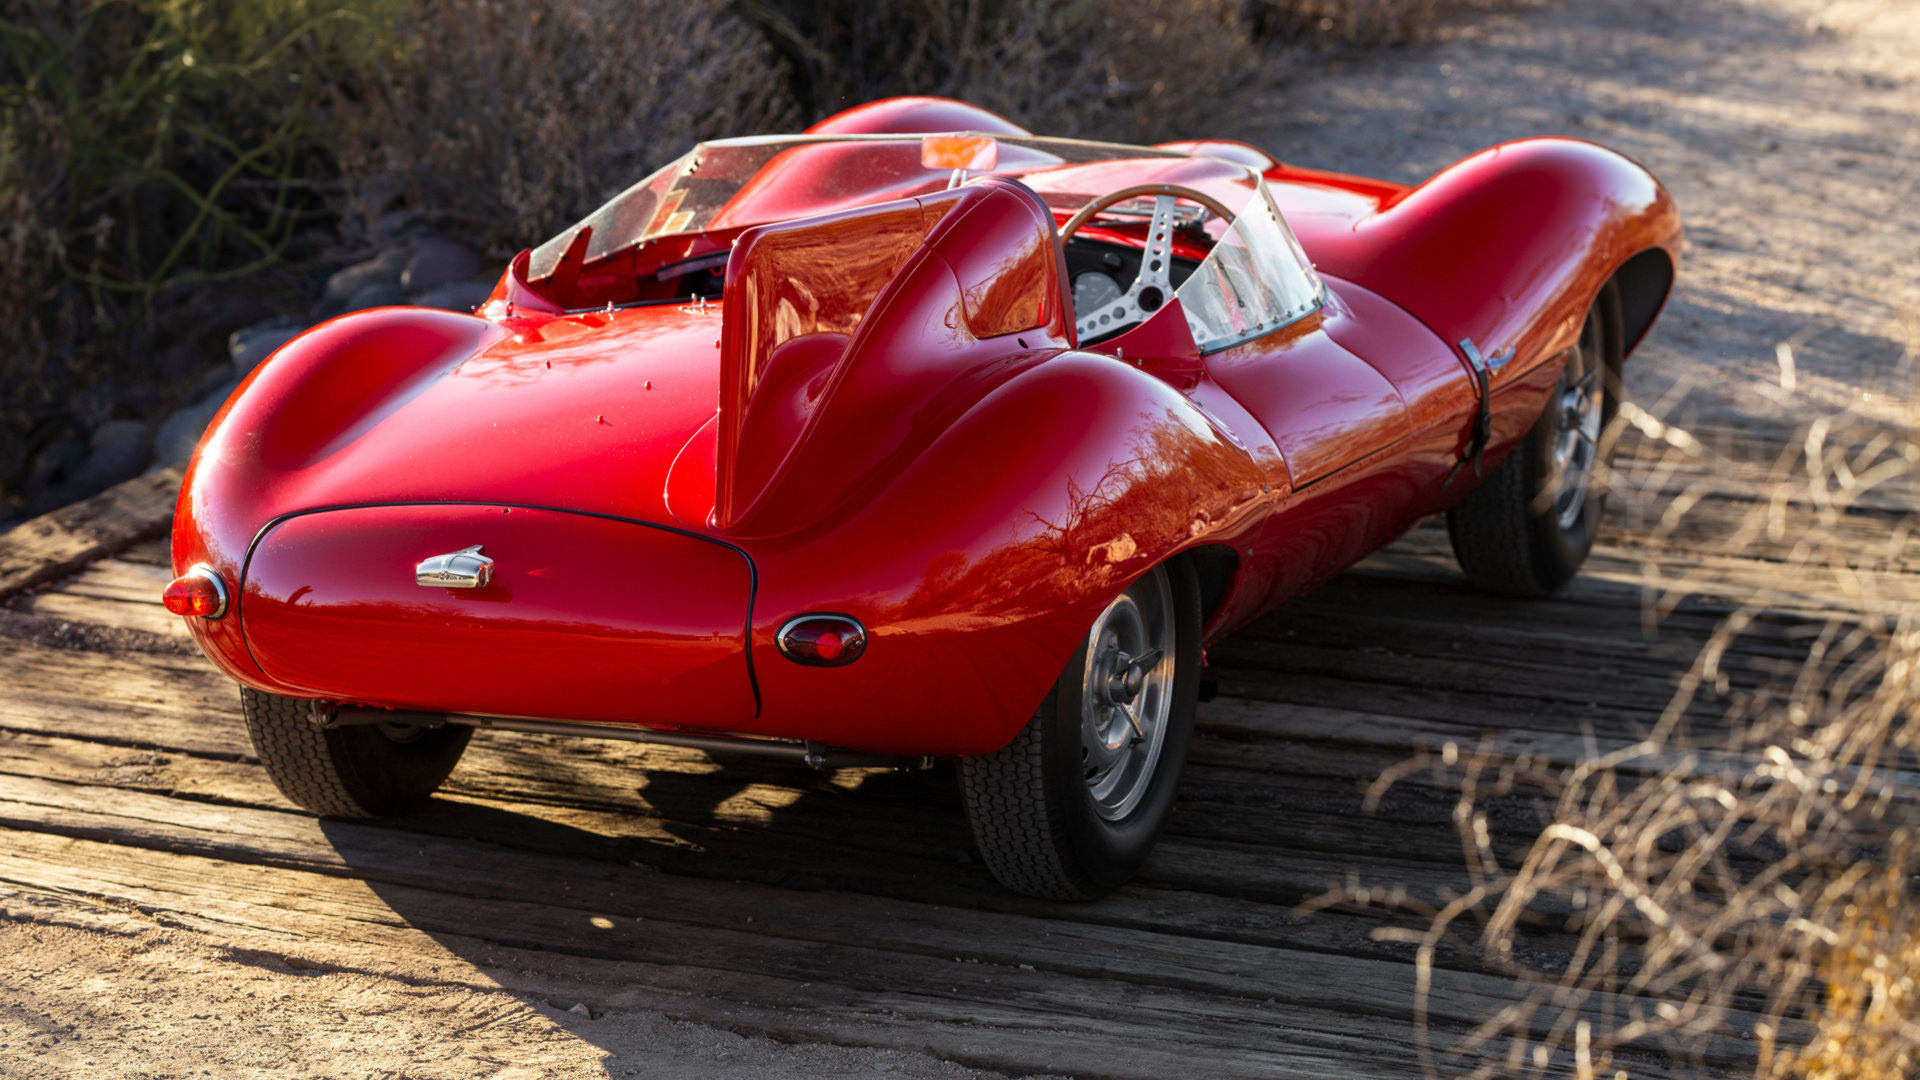 نمای سه چهارم عقب خودرو جگوار دی تایپ کلاسیک مدل 1955 / 1955 Jaguar D-Type قرمز رنگ